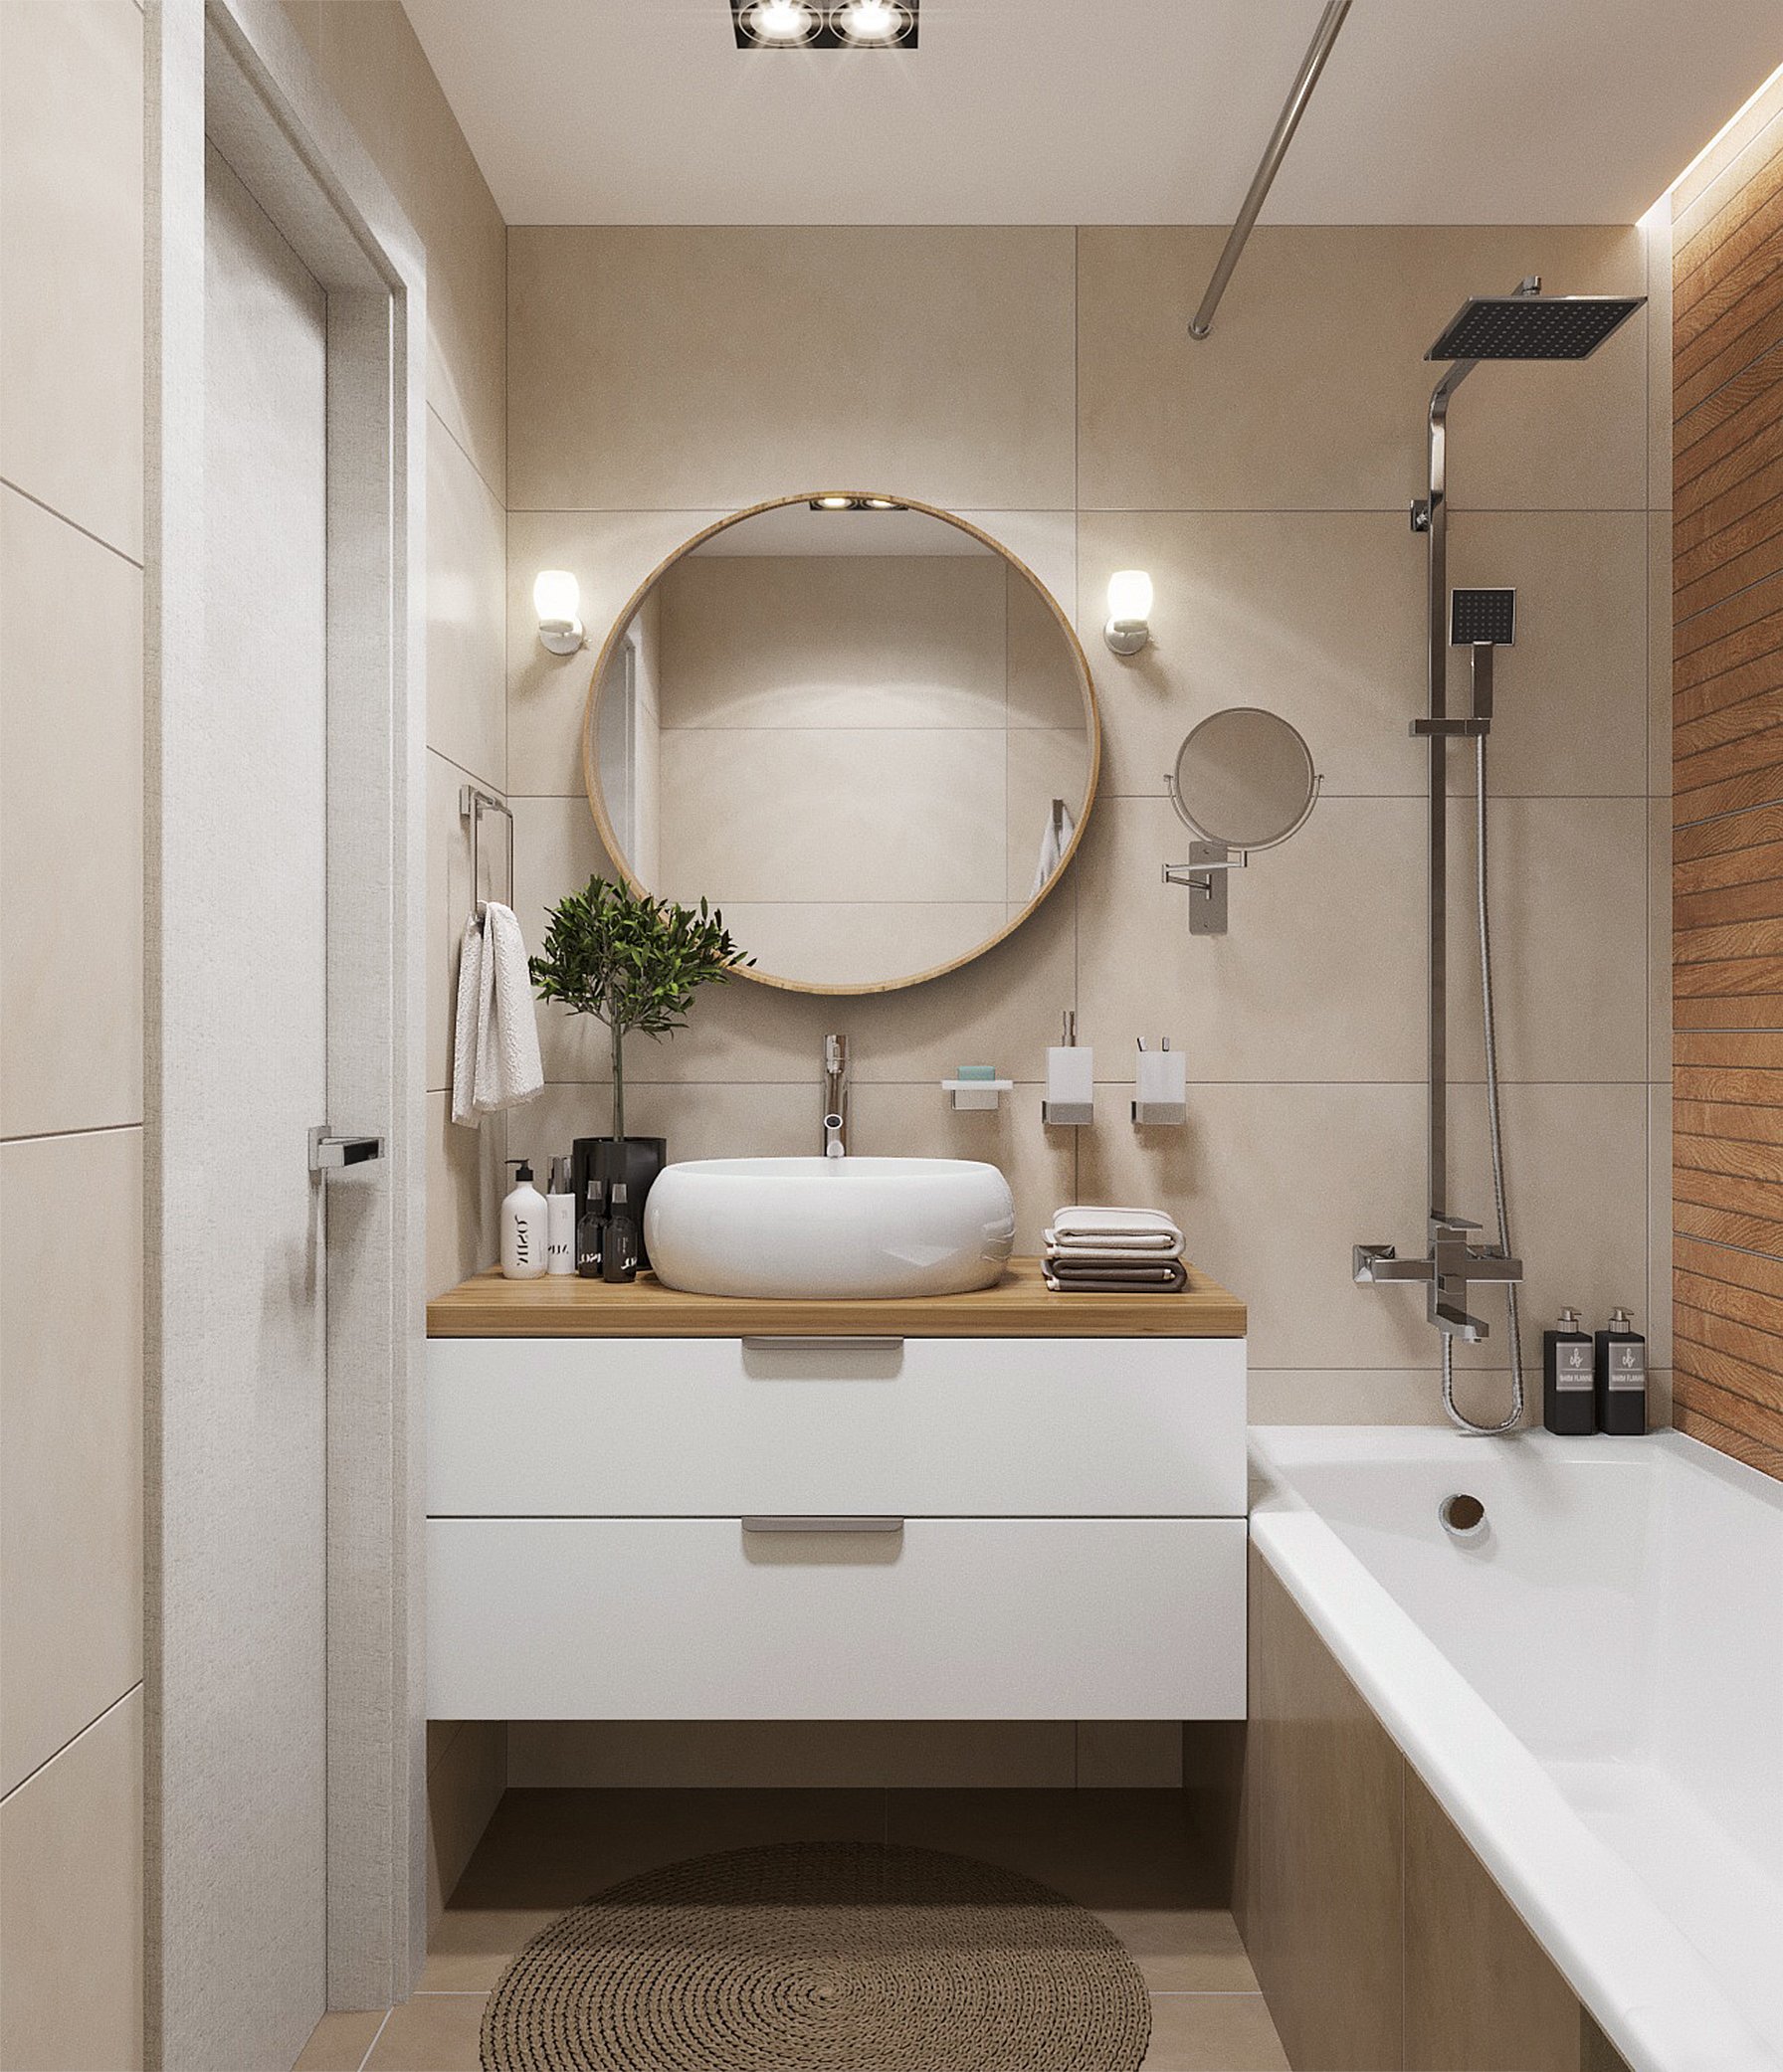 Ванная комната 3 кв метра: дизайн, фото